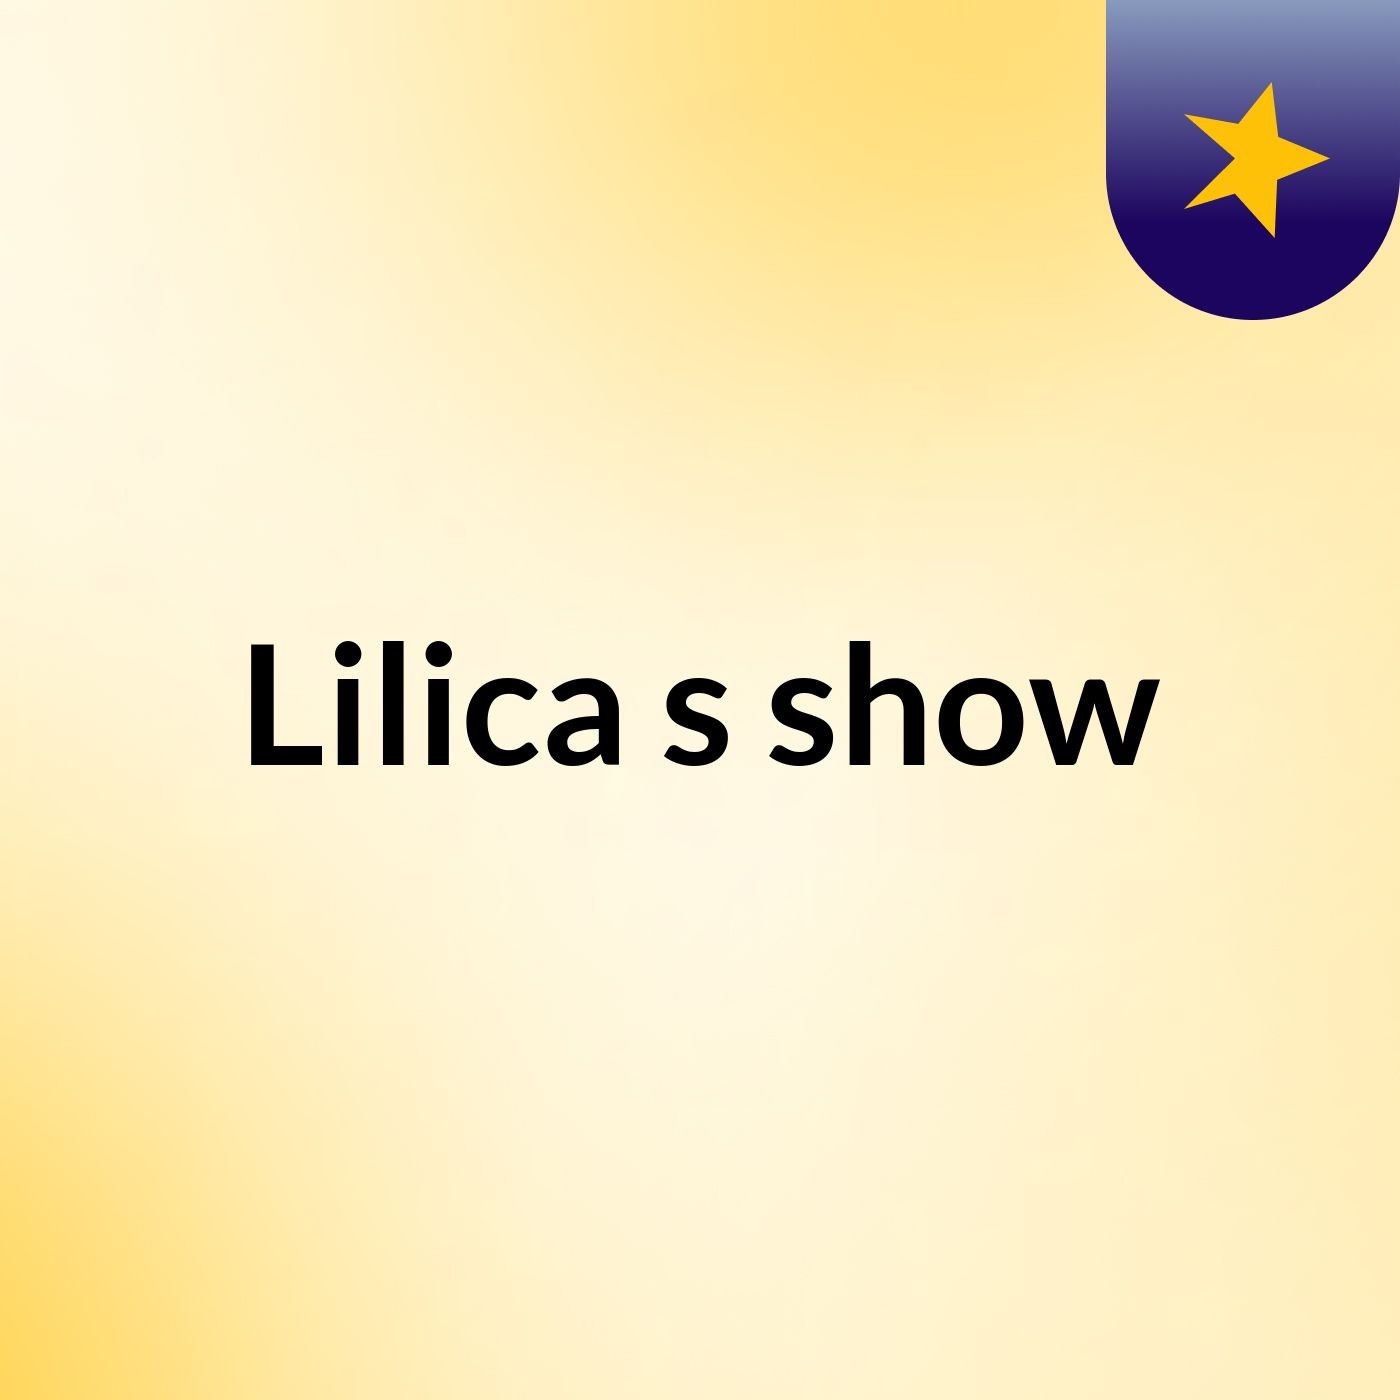 Lilica's show